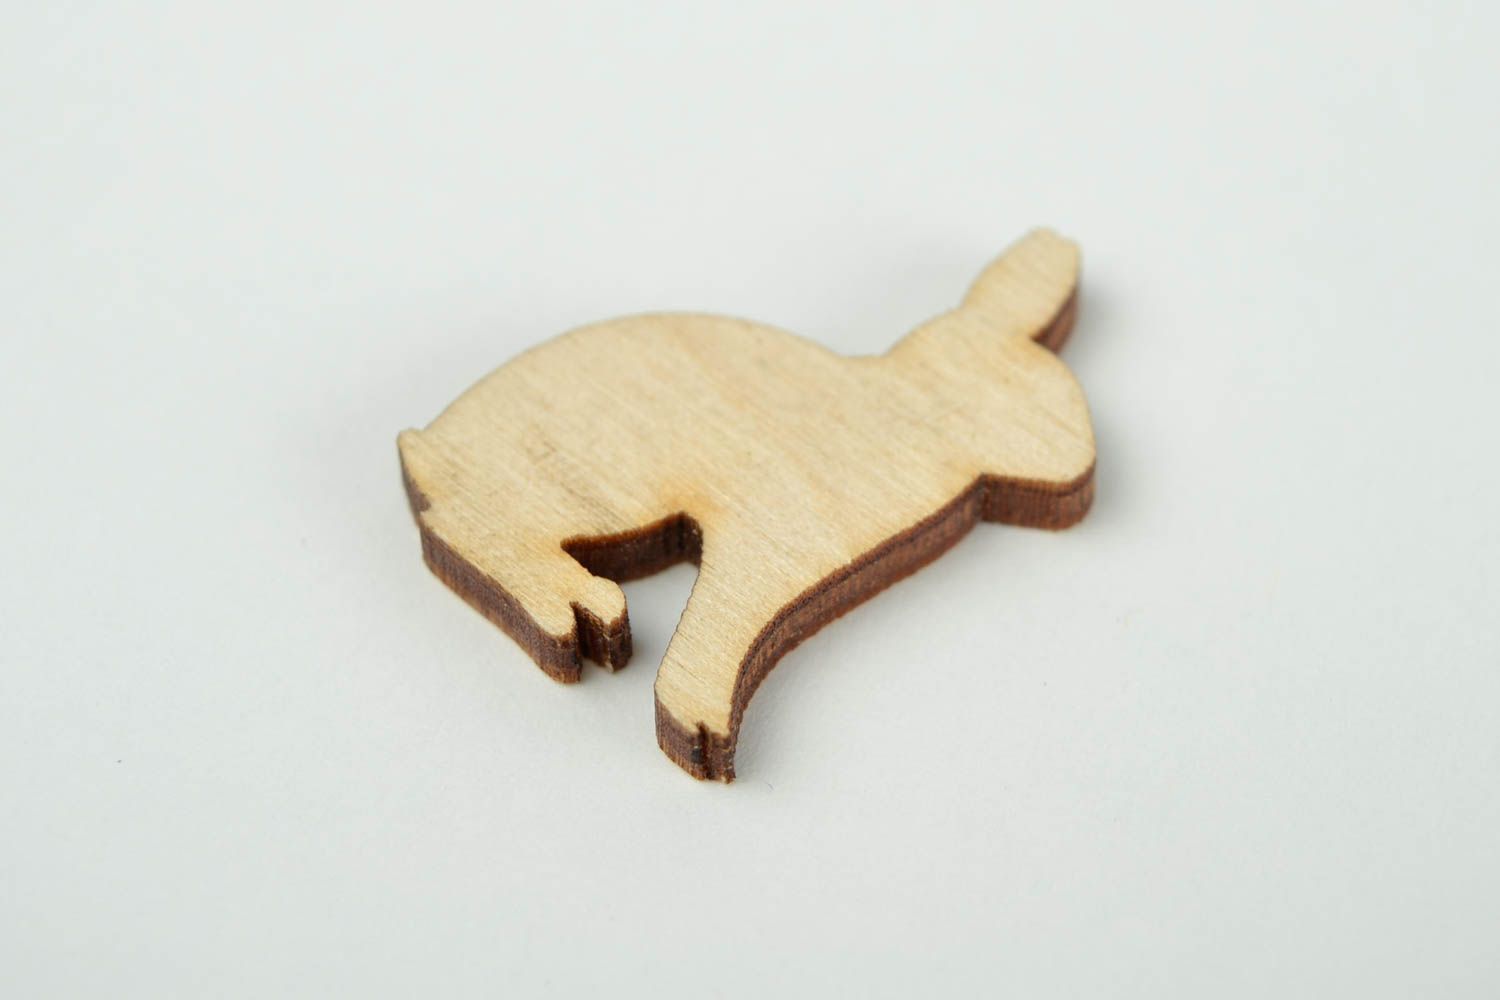 Handmade wooden cute blank unusual goods for creativity art and craft ideas photo 3